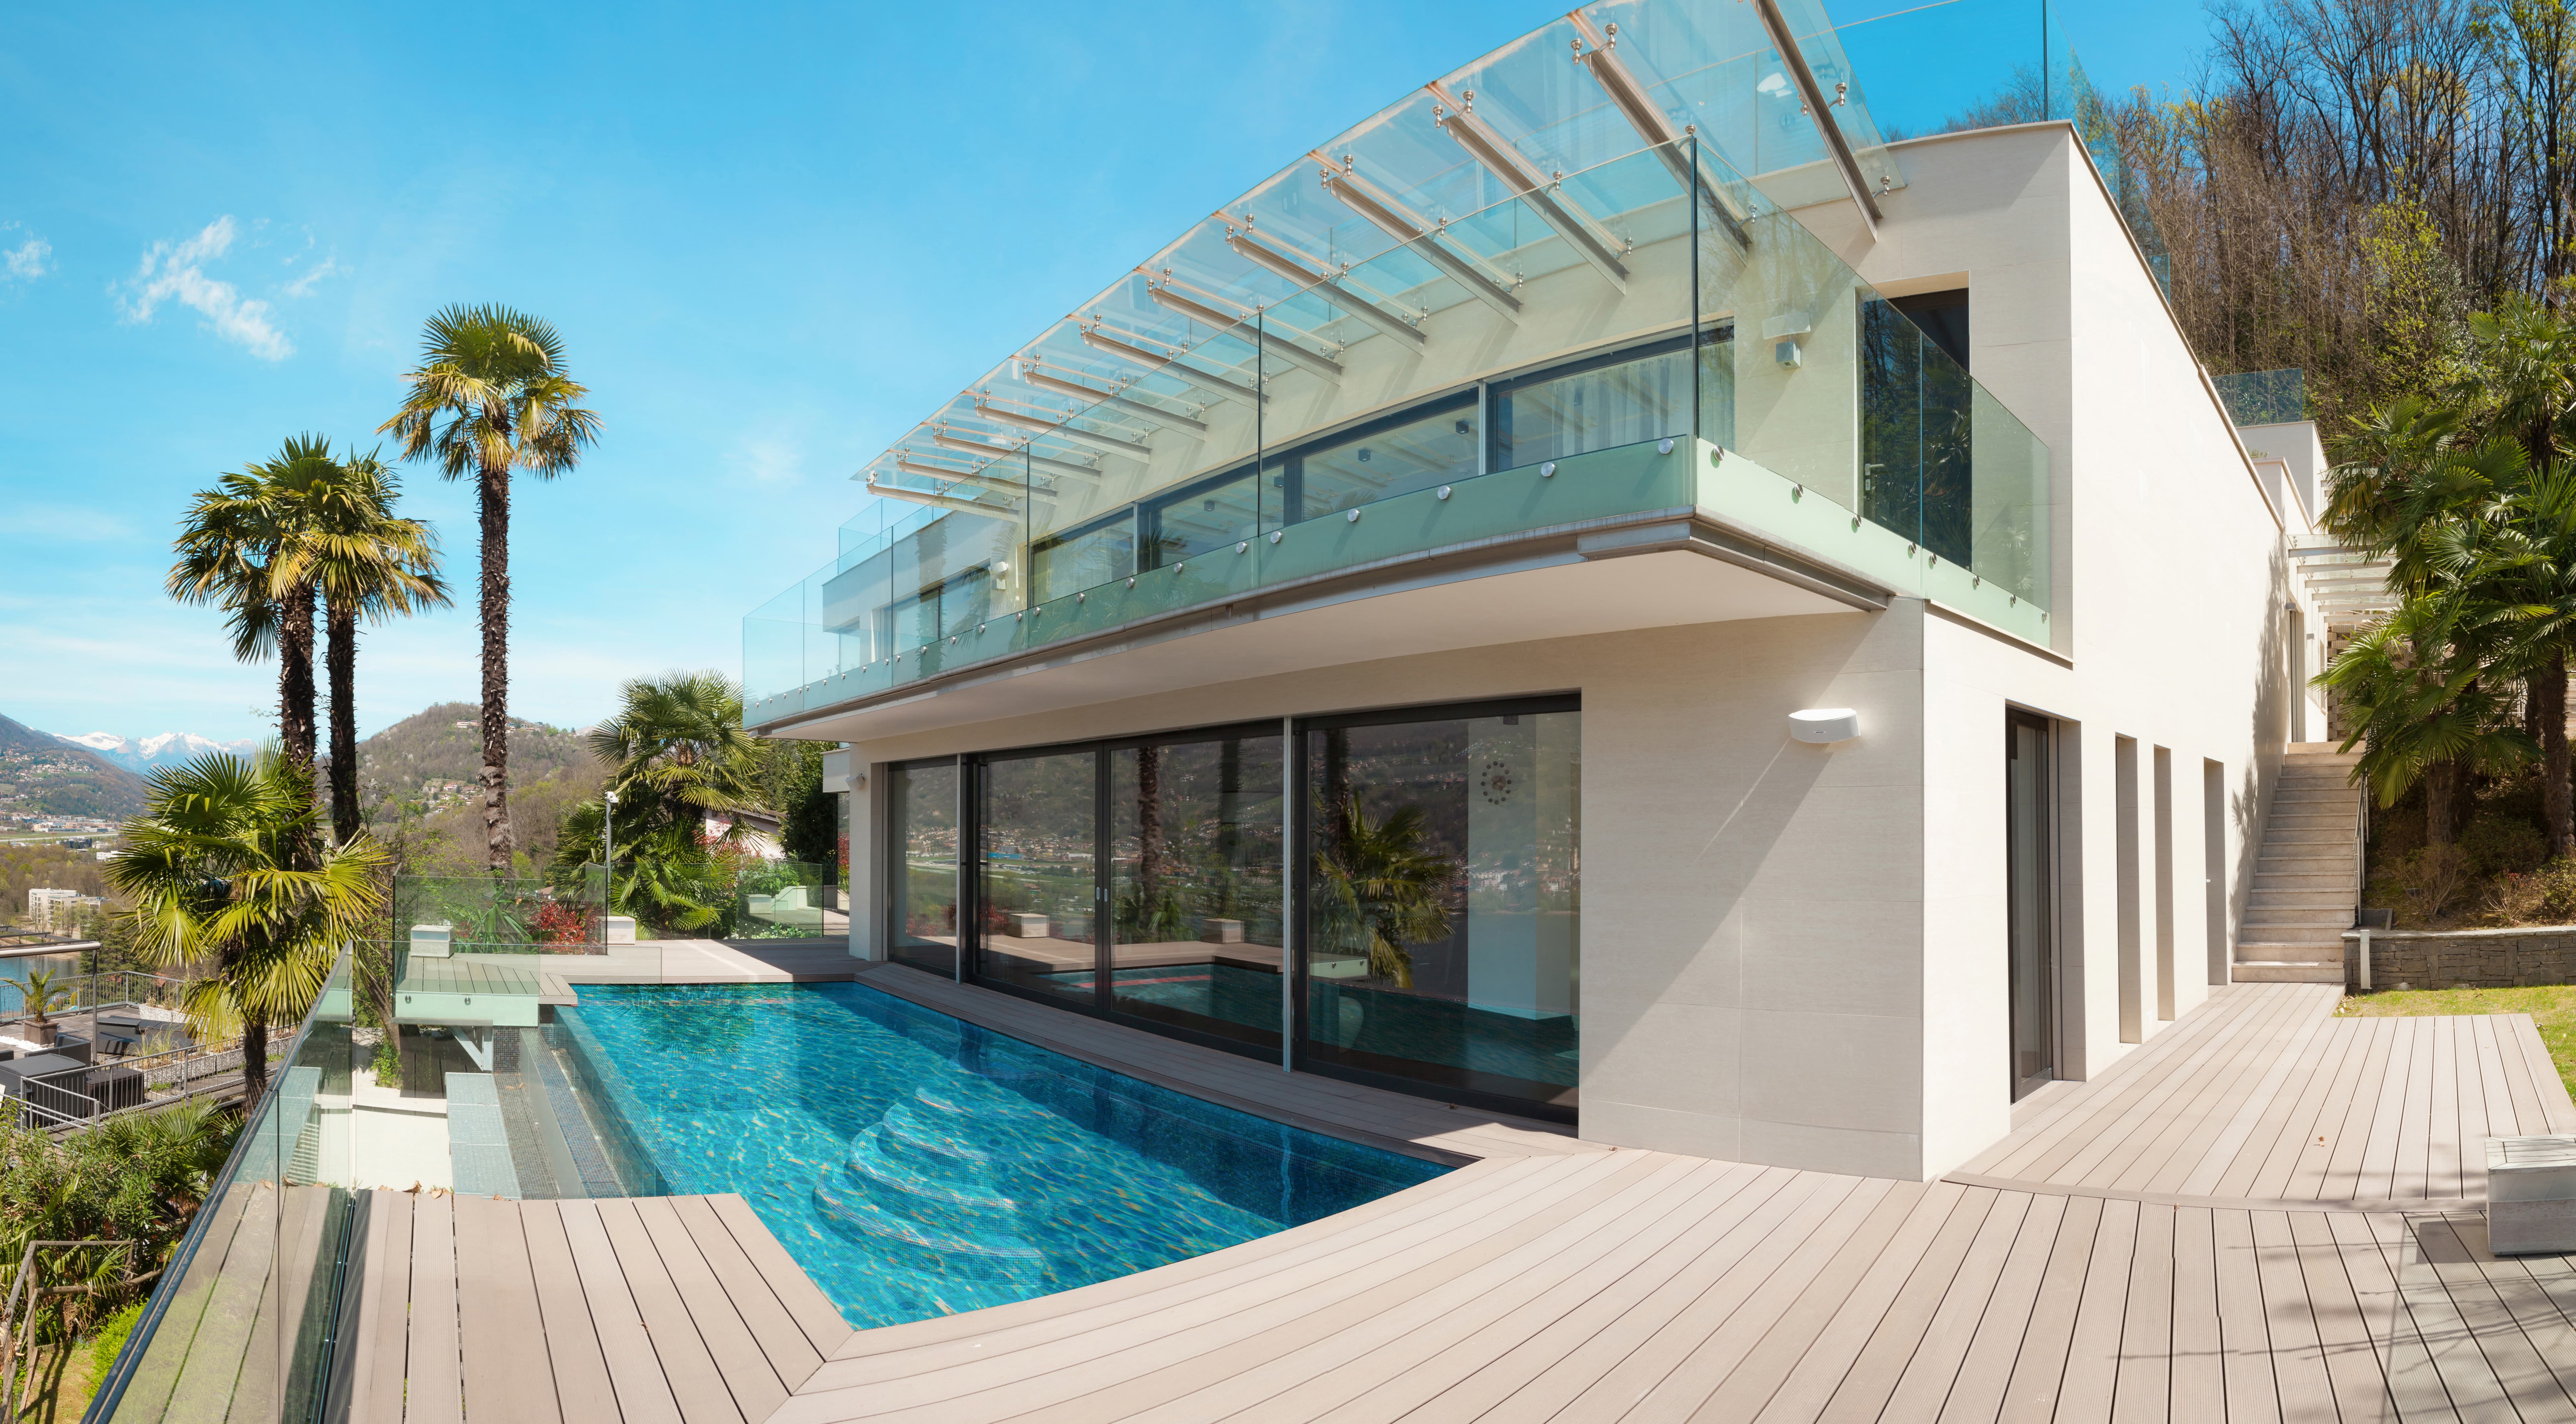 An Artform Collective frameless glass balustrade around a balcony above a pool.